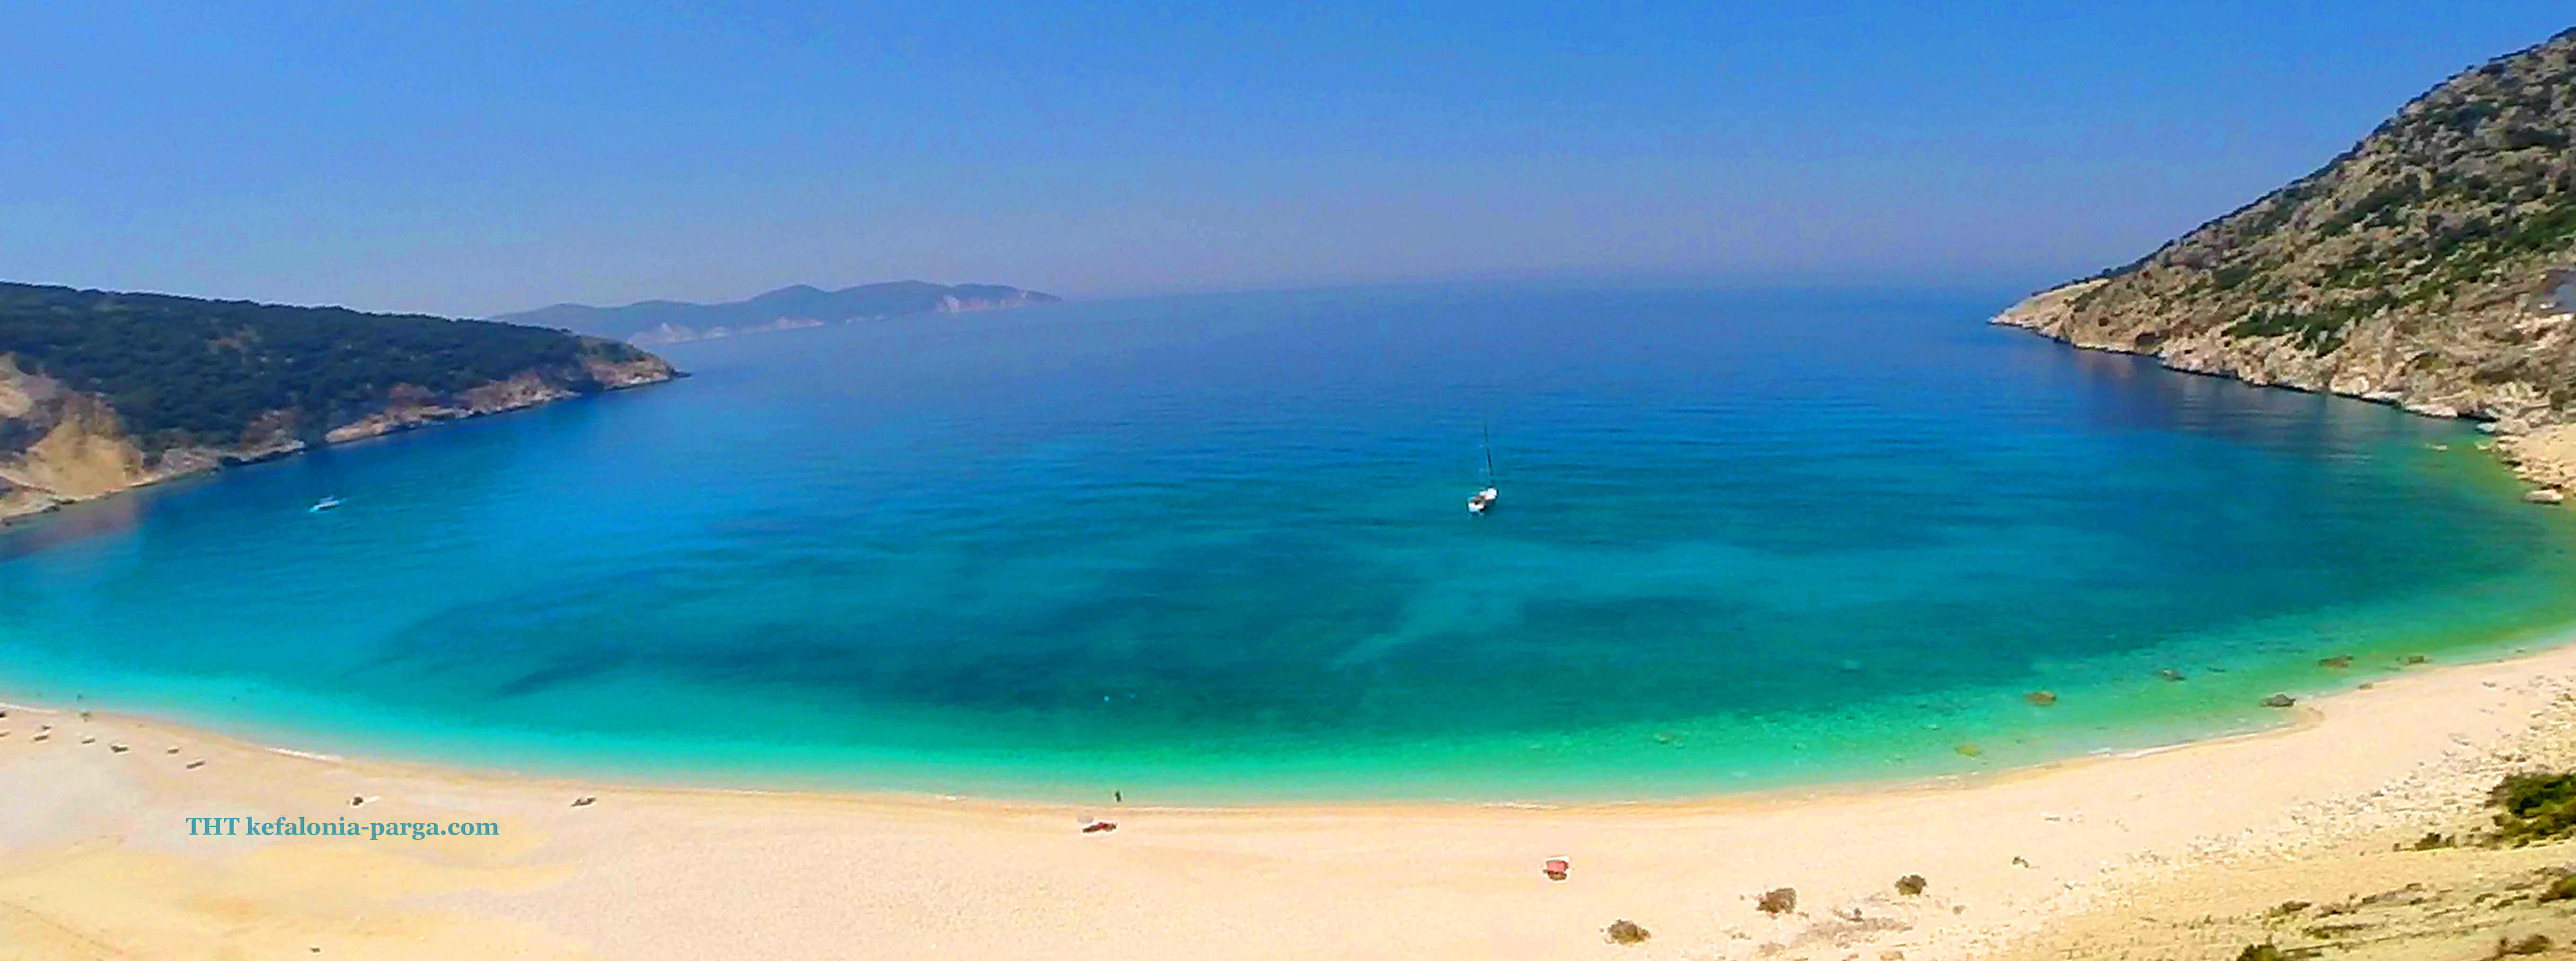 Myrtos beach, Cephalonia, Greece